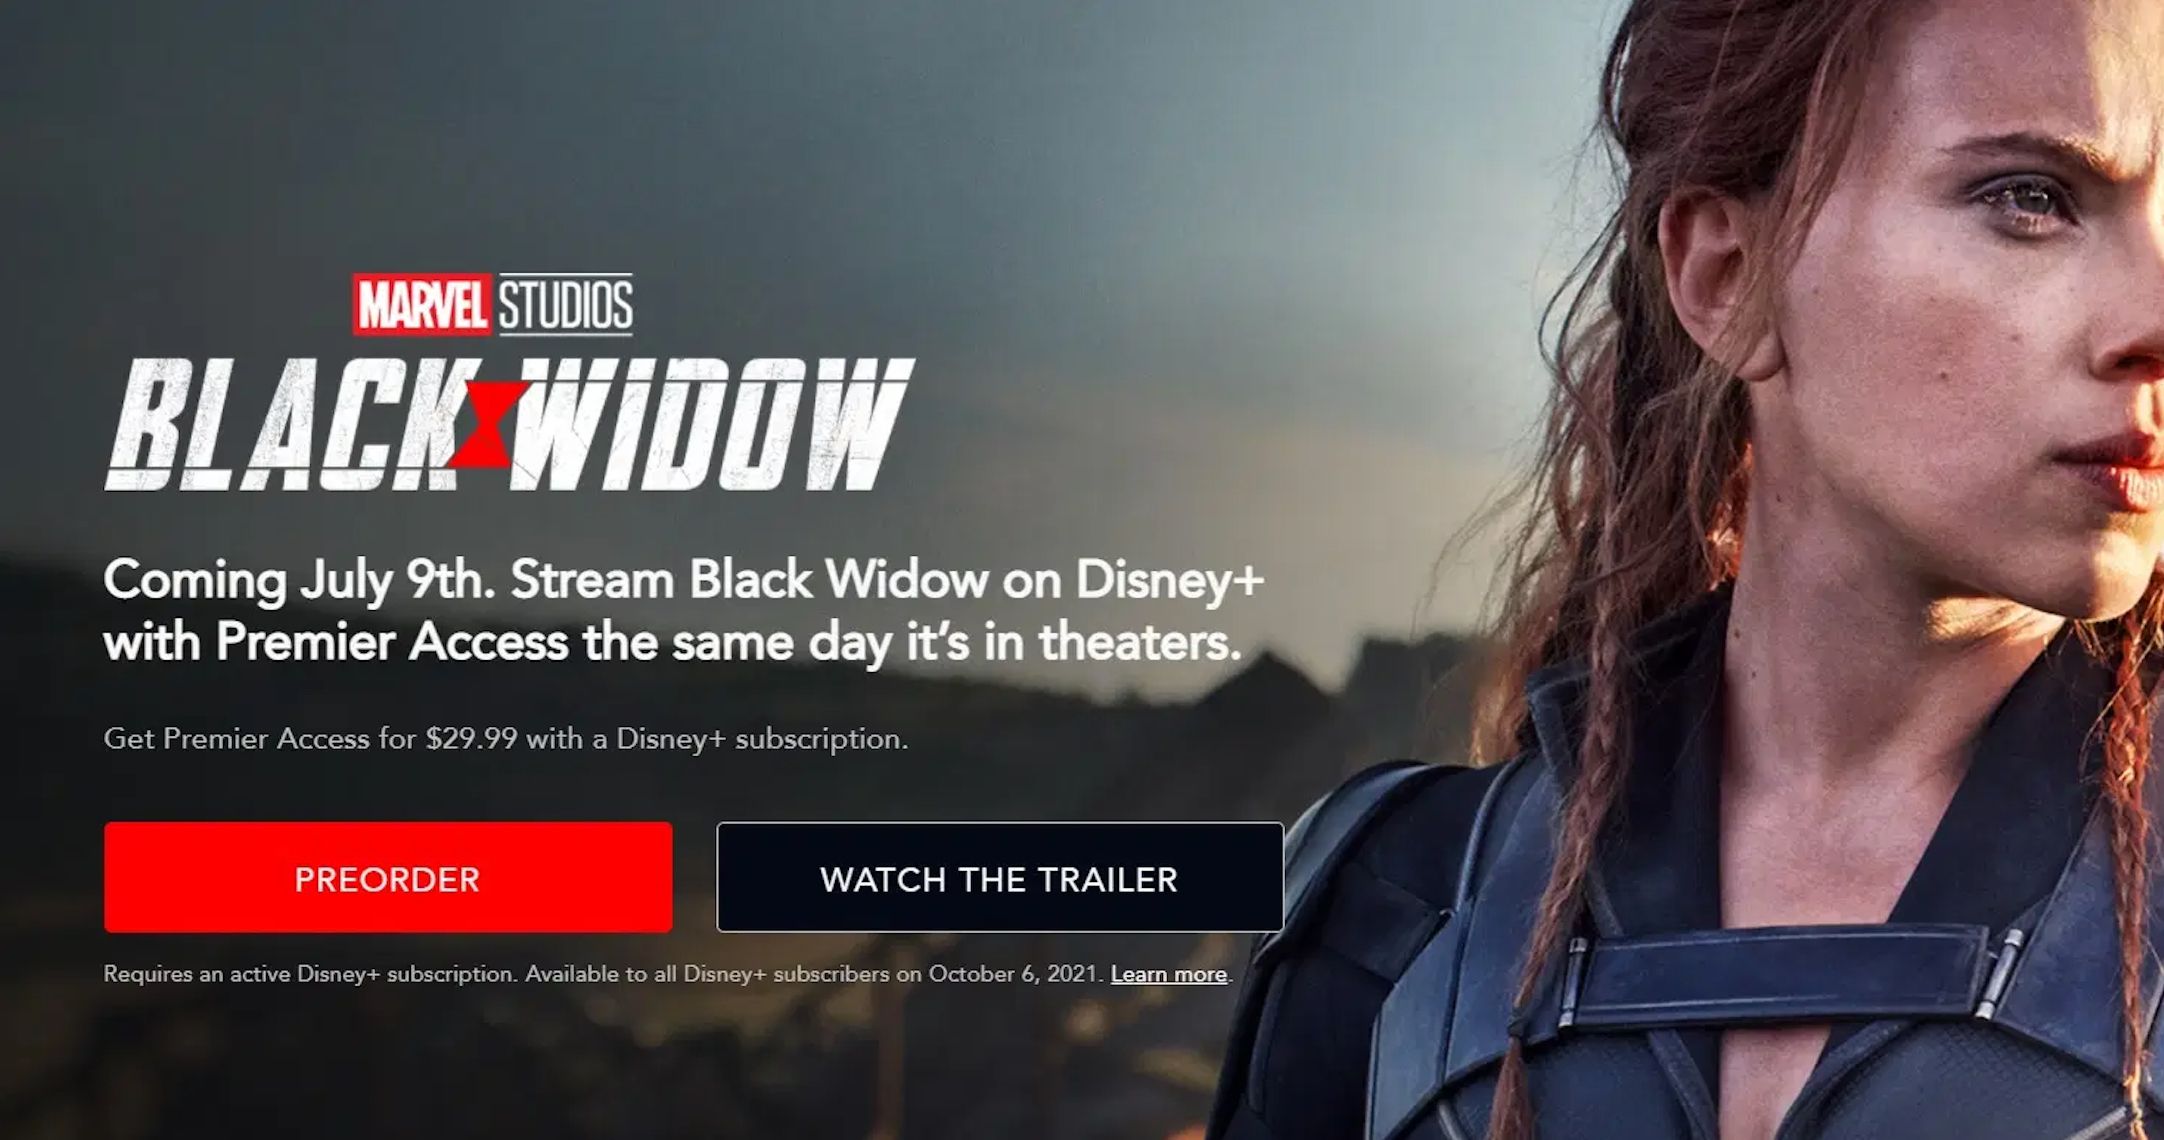 When Will Black Widow Be Free to Stream on Disney+?